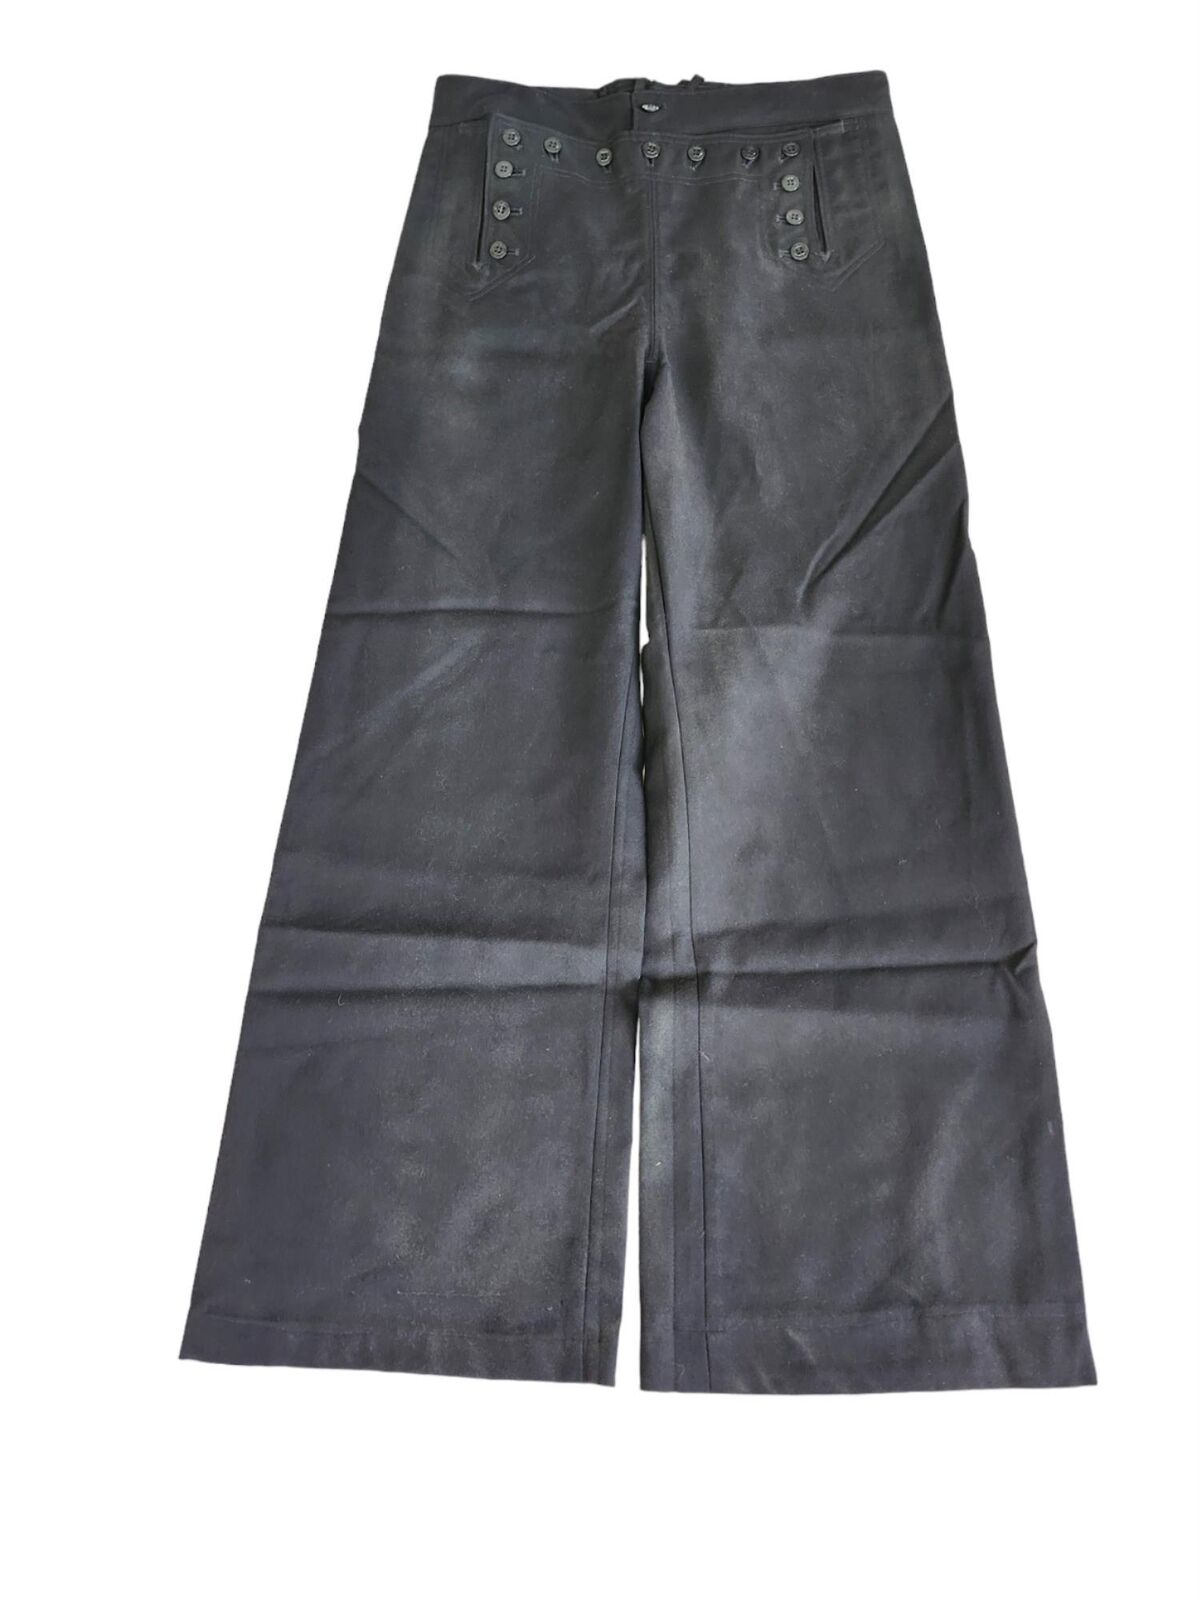 Vintage US Navy Crackerjack Pants 13 Button Wide Leg PANT black Wool 34 x 30